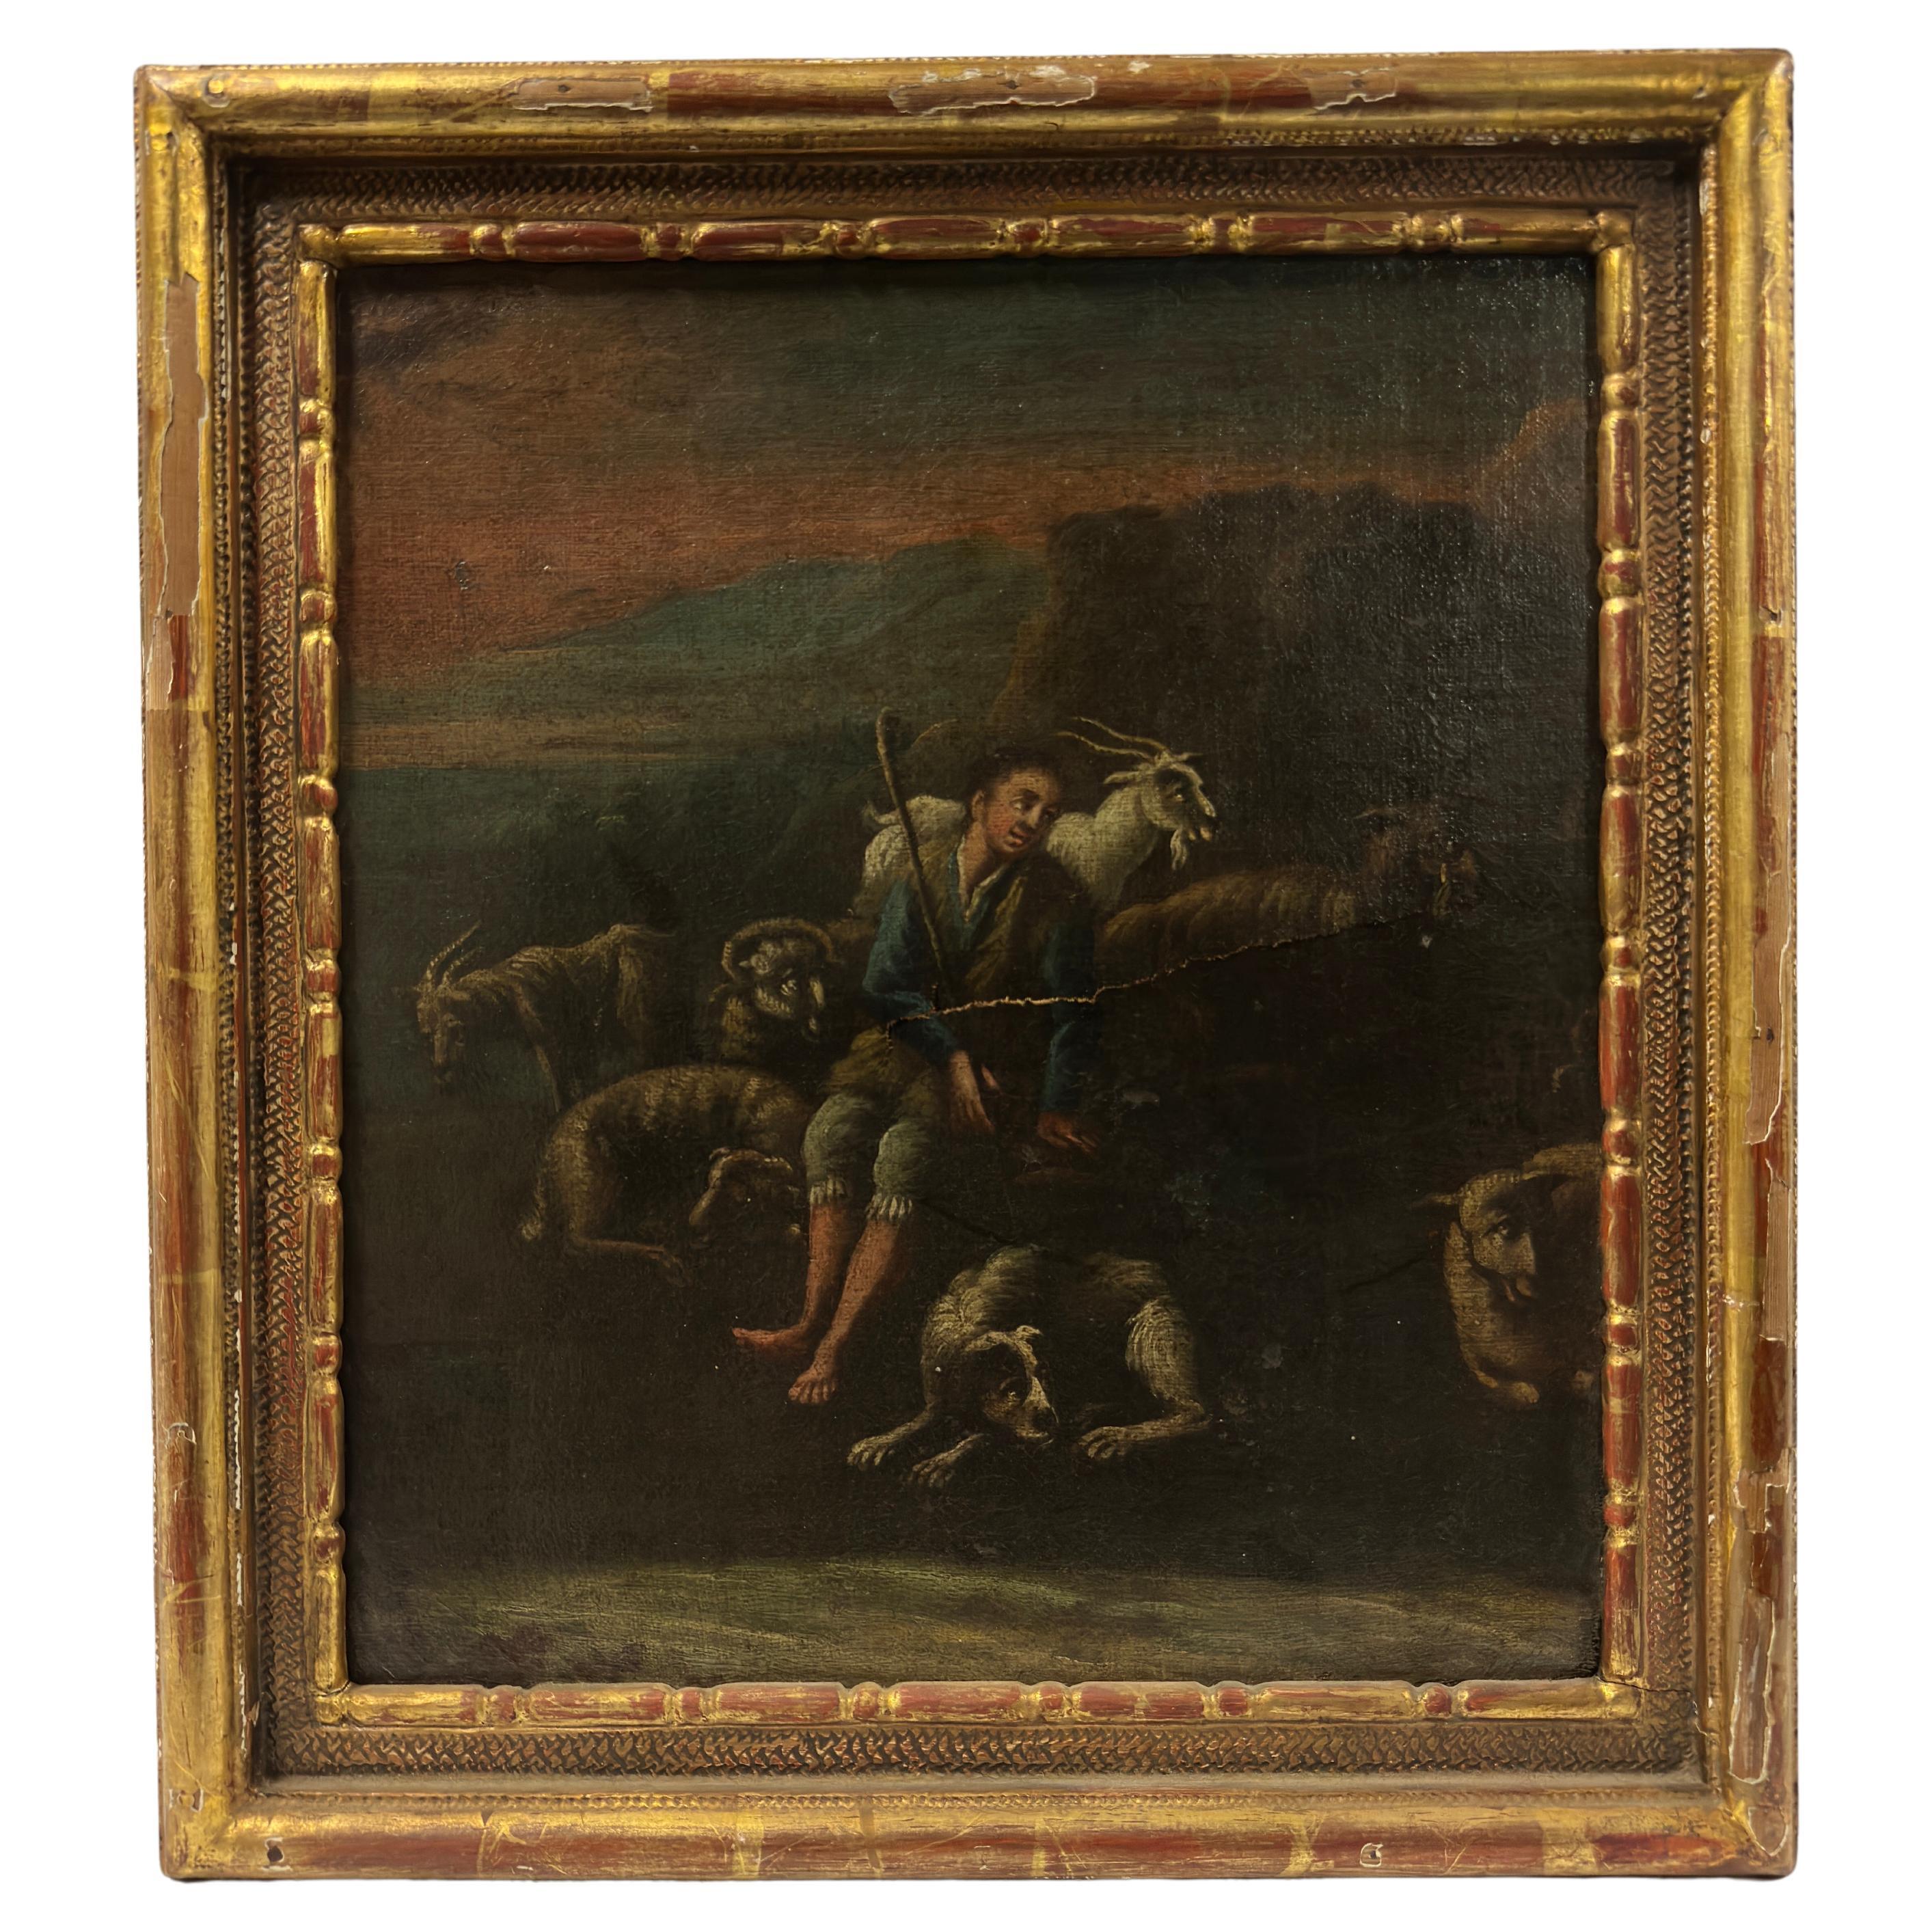 19th Century English Painting Entitled "The Shepherd"